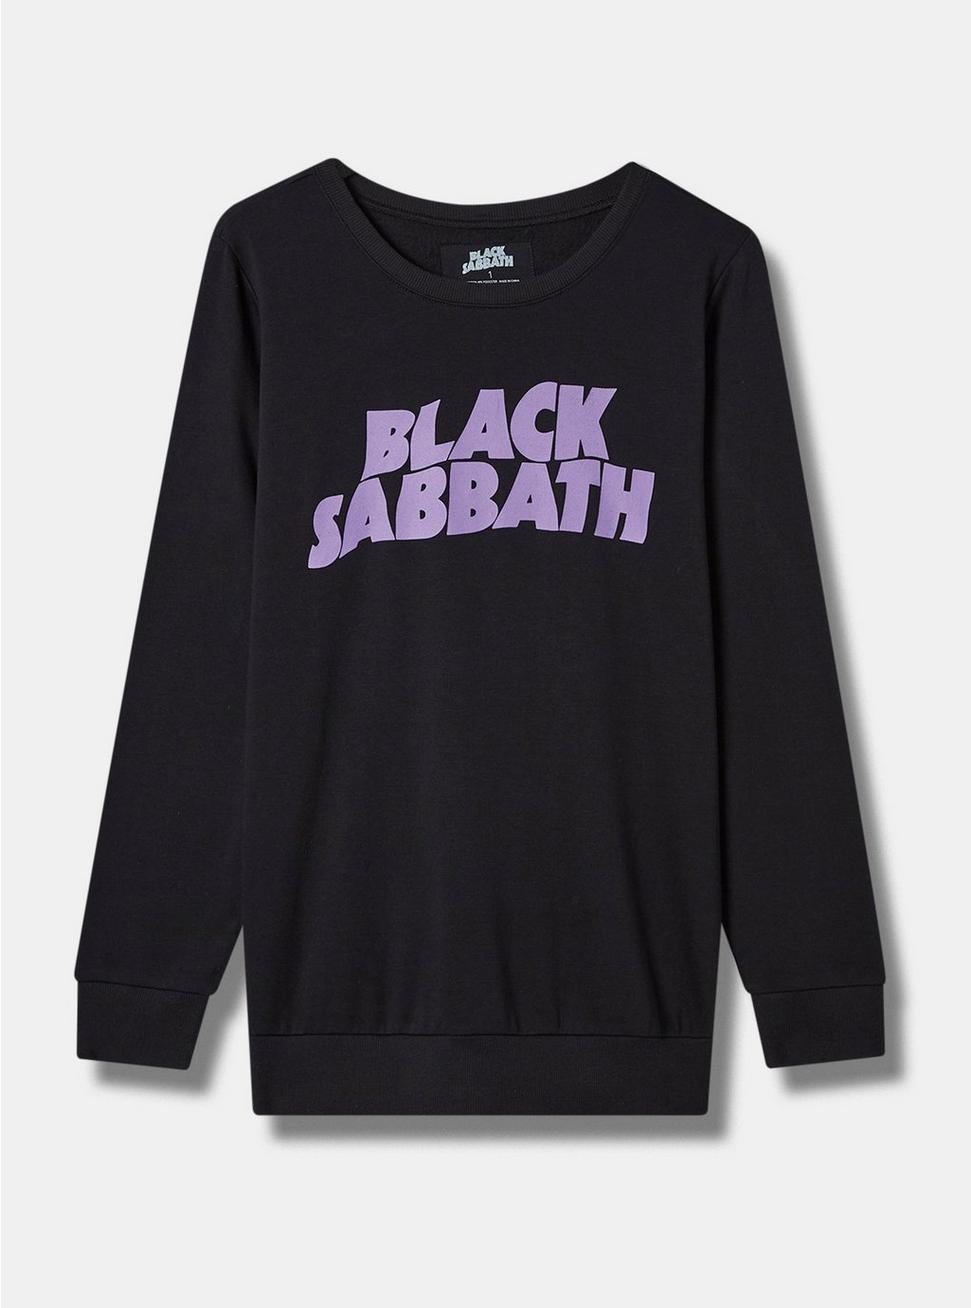 Black Sabbath Fleece Sweatshirt, DEEP BLACK, hi-res